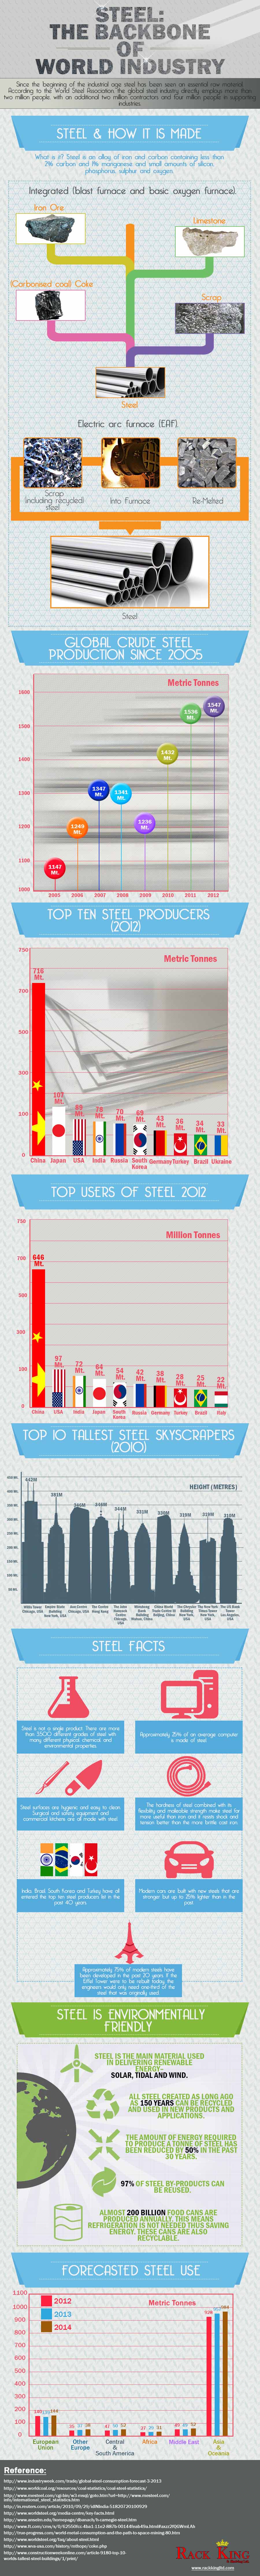 Steel: The Backbone of the World Industry